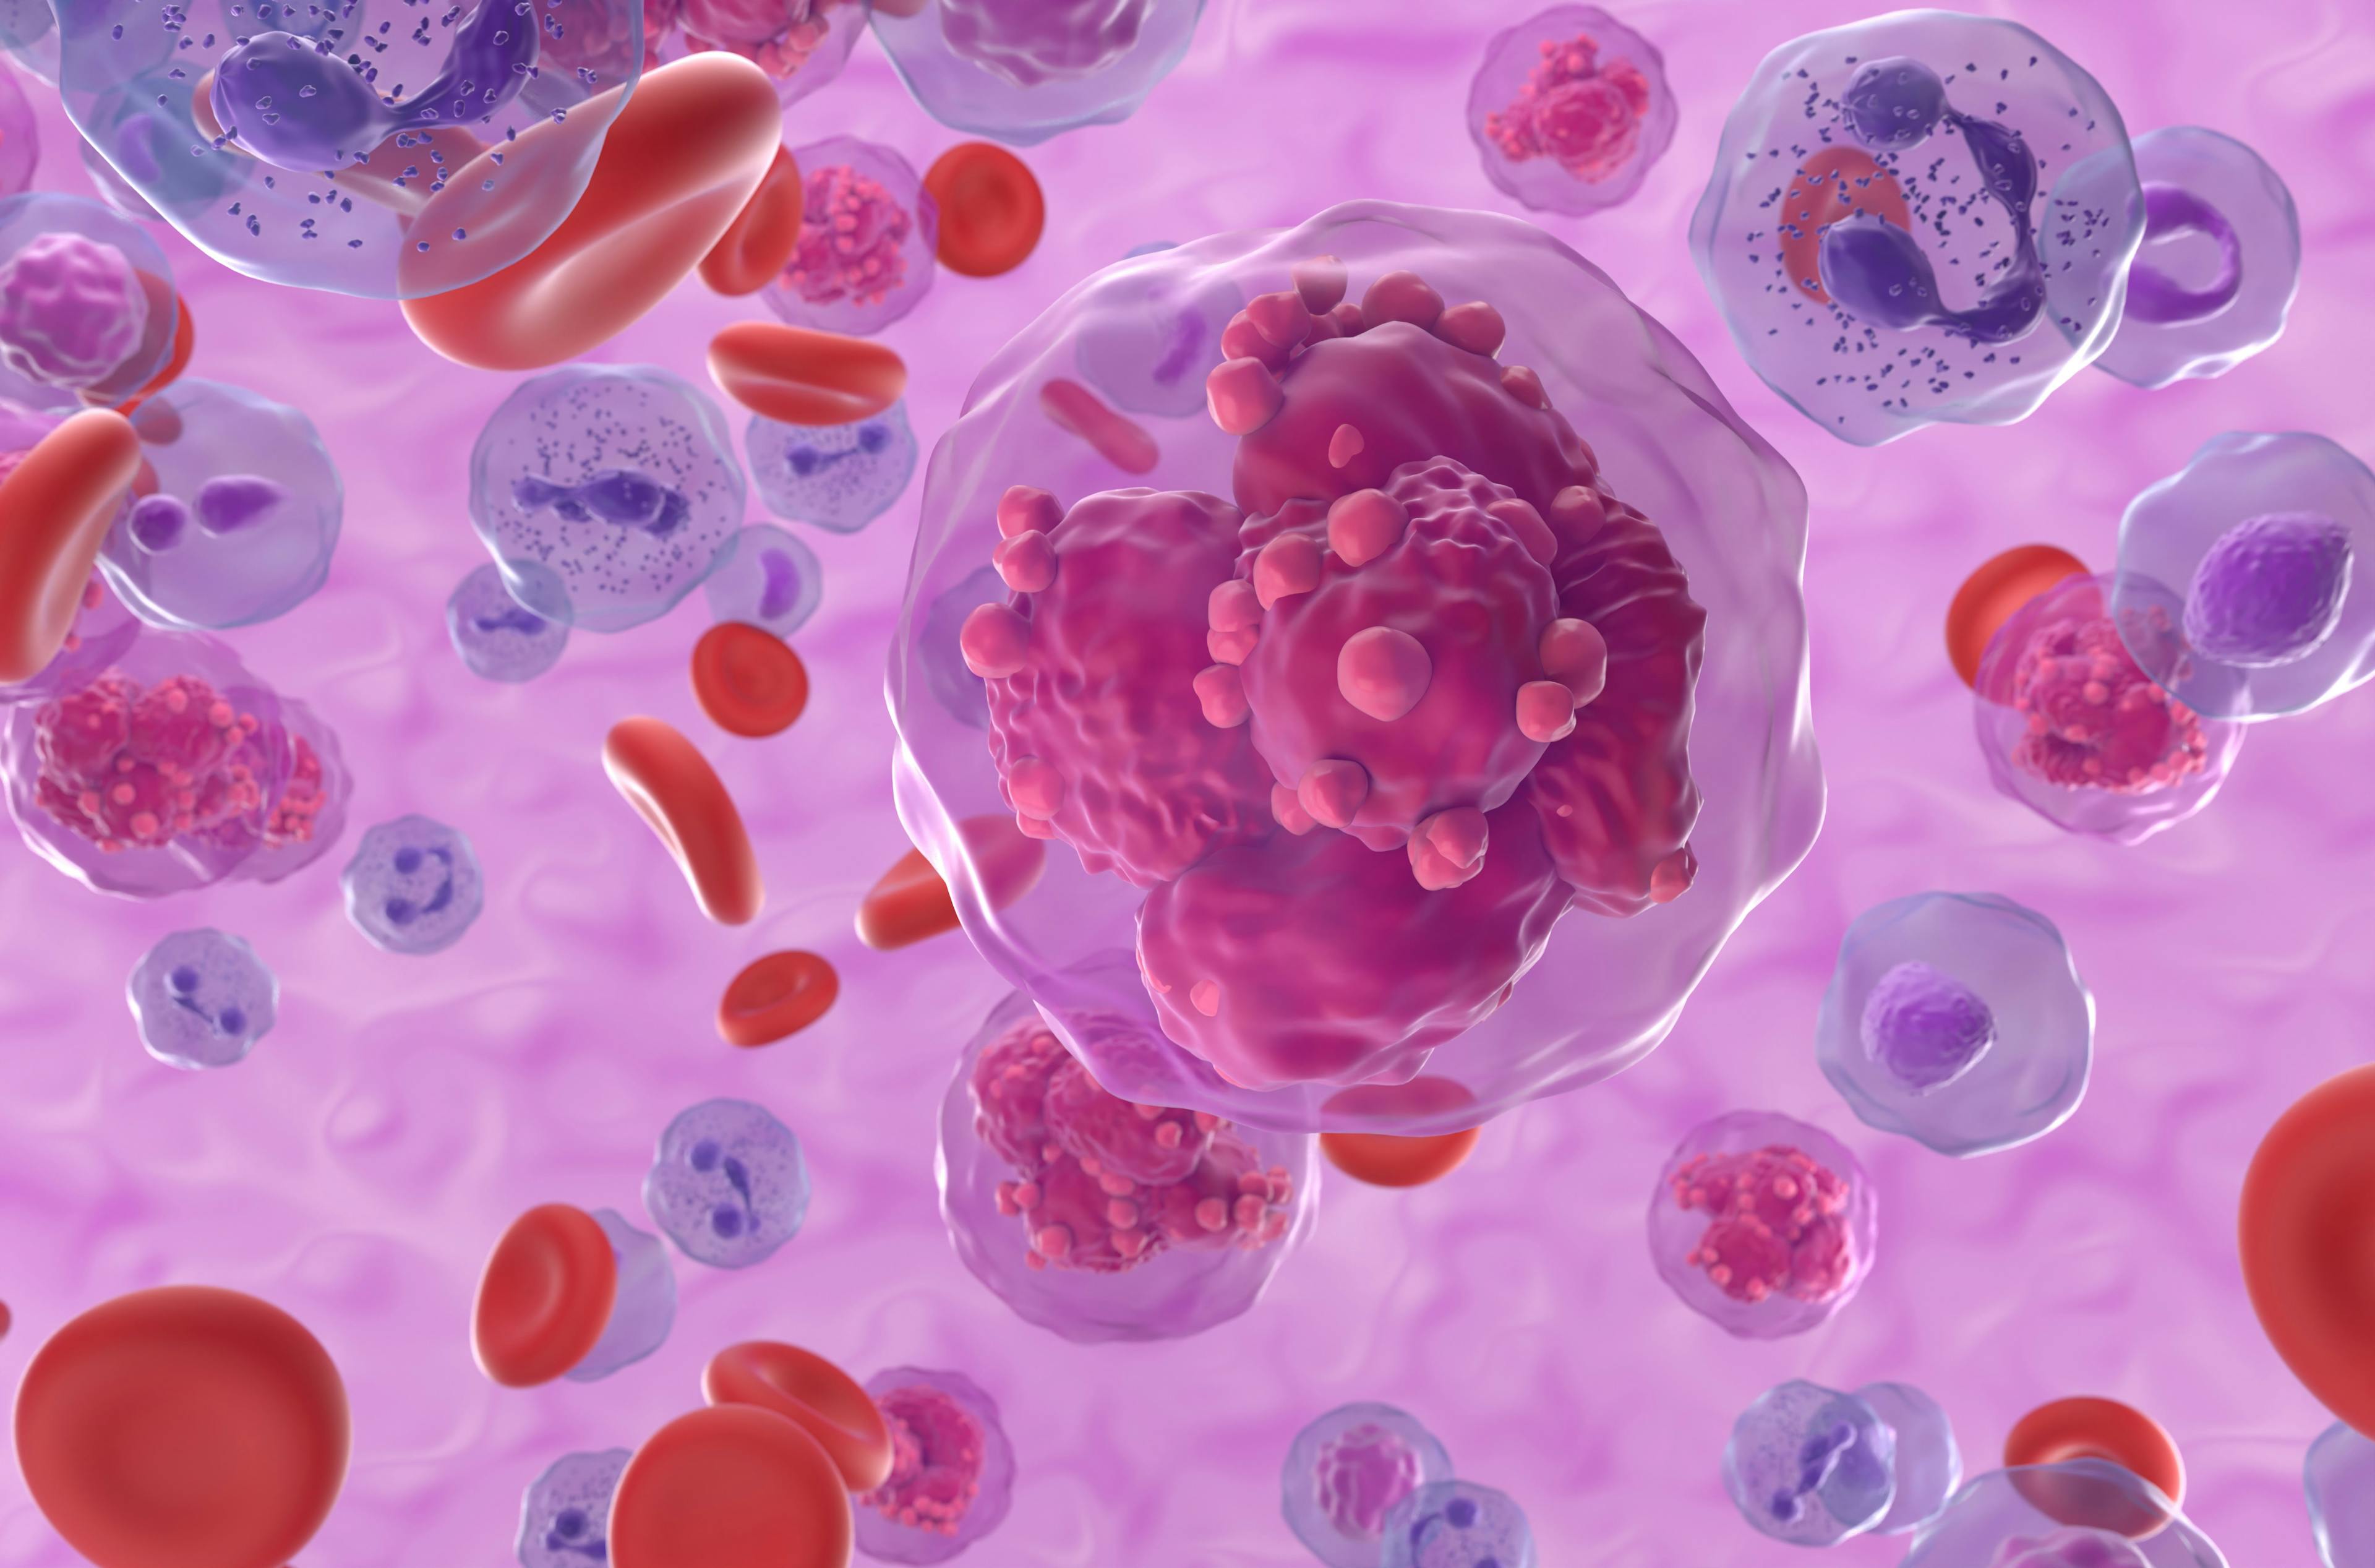 Acute myeloid leukemia (AML) cells in blood flow - isometric view 3d illustration: © LASZLO - stock.adobe.com